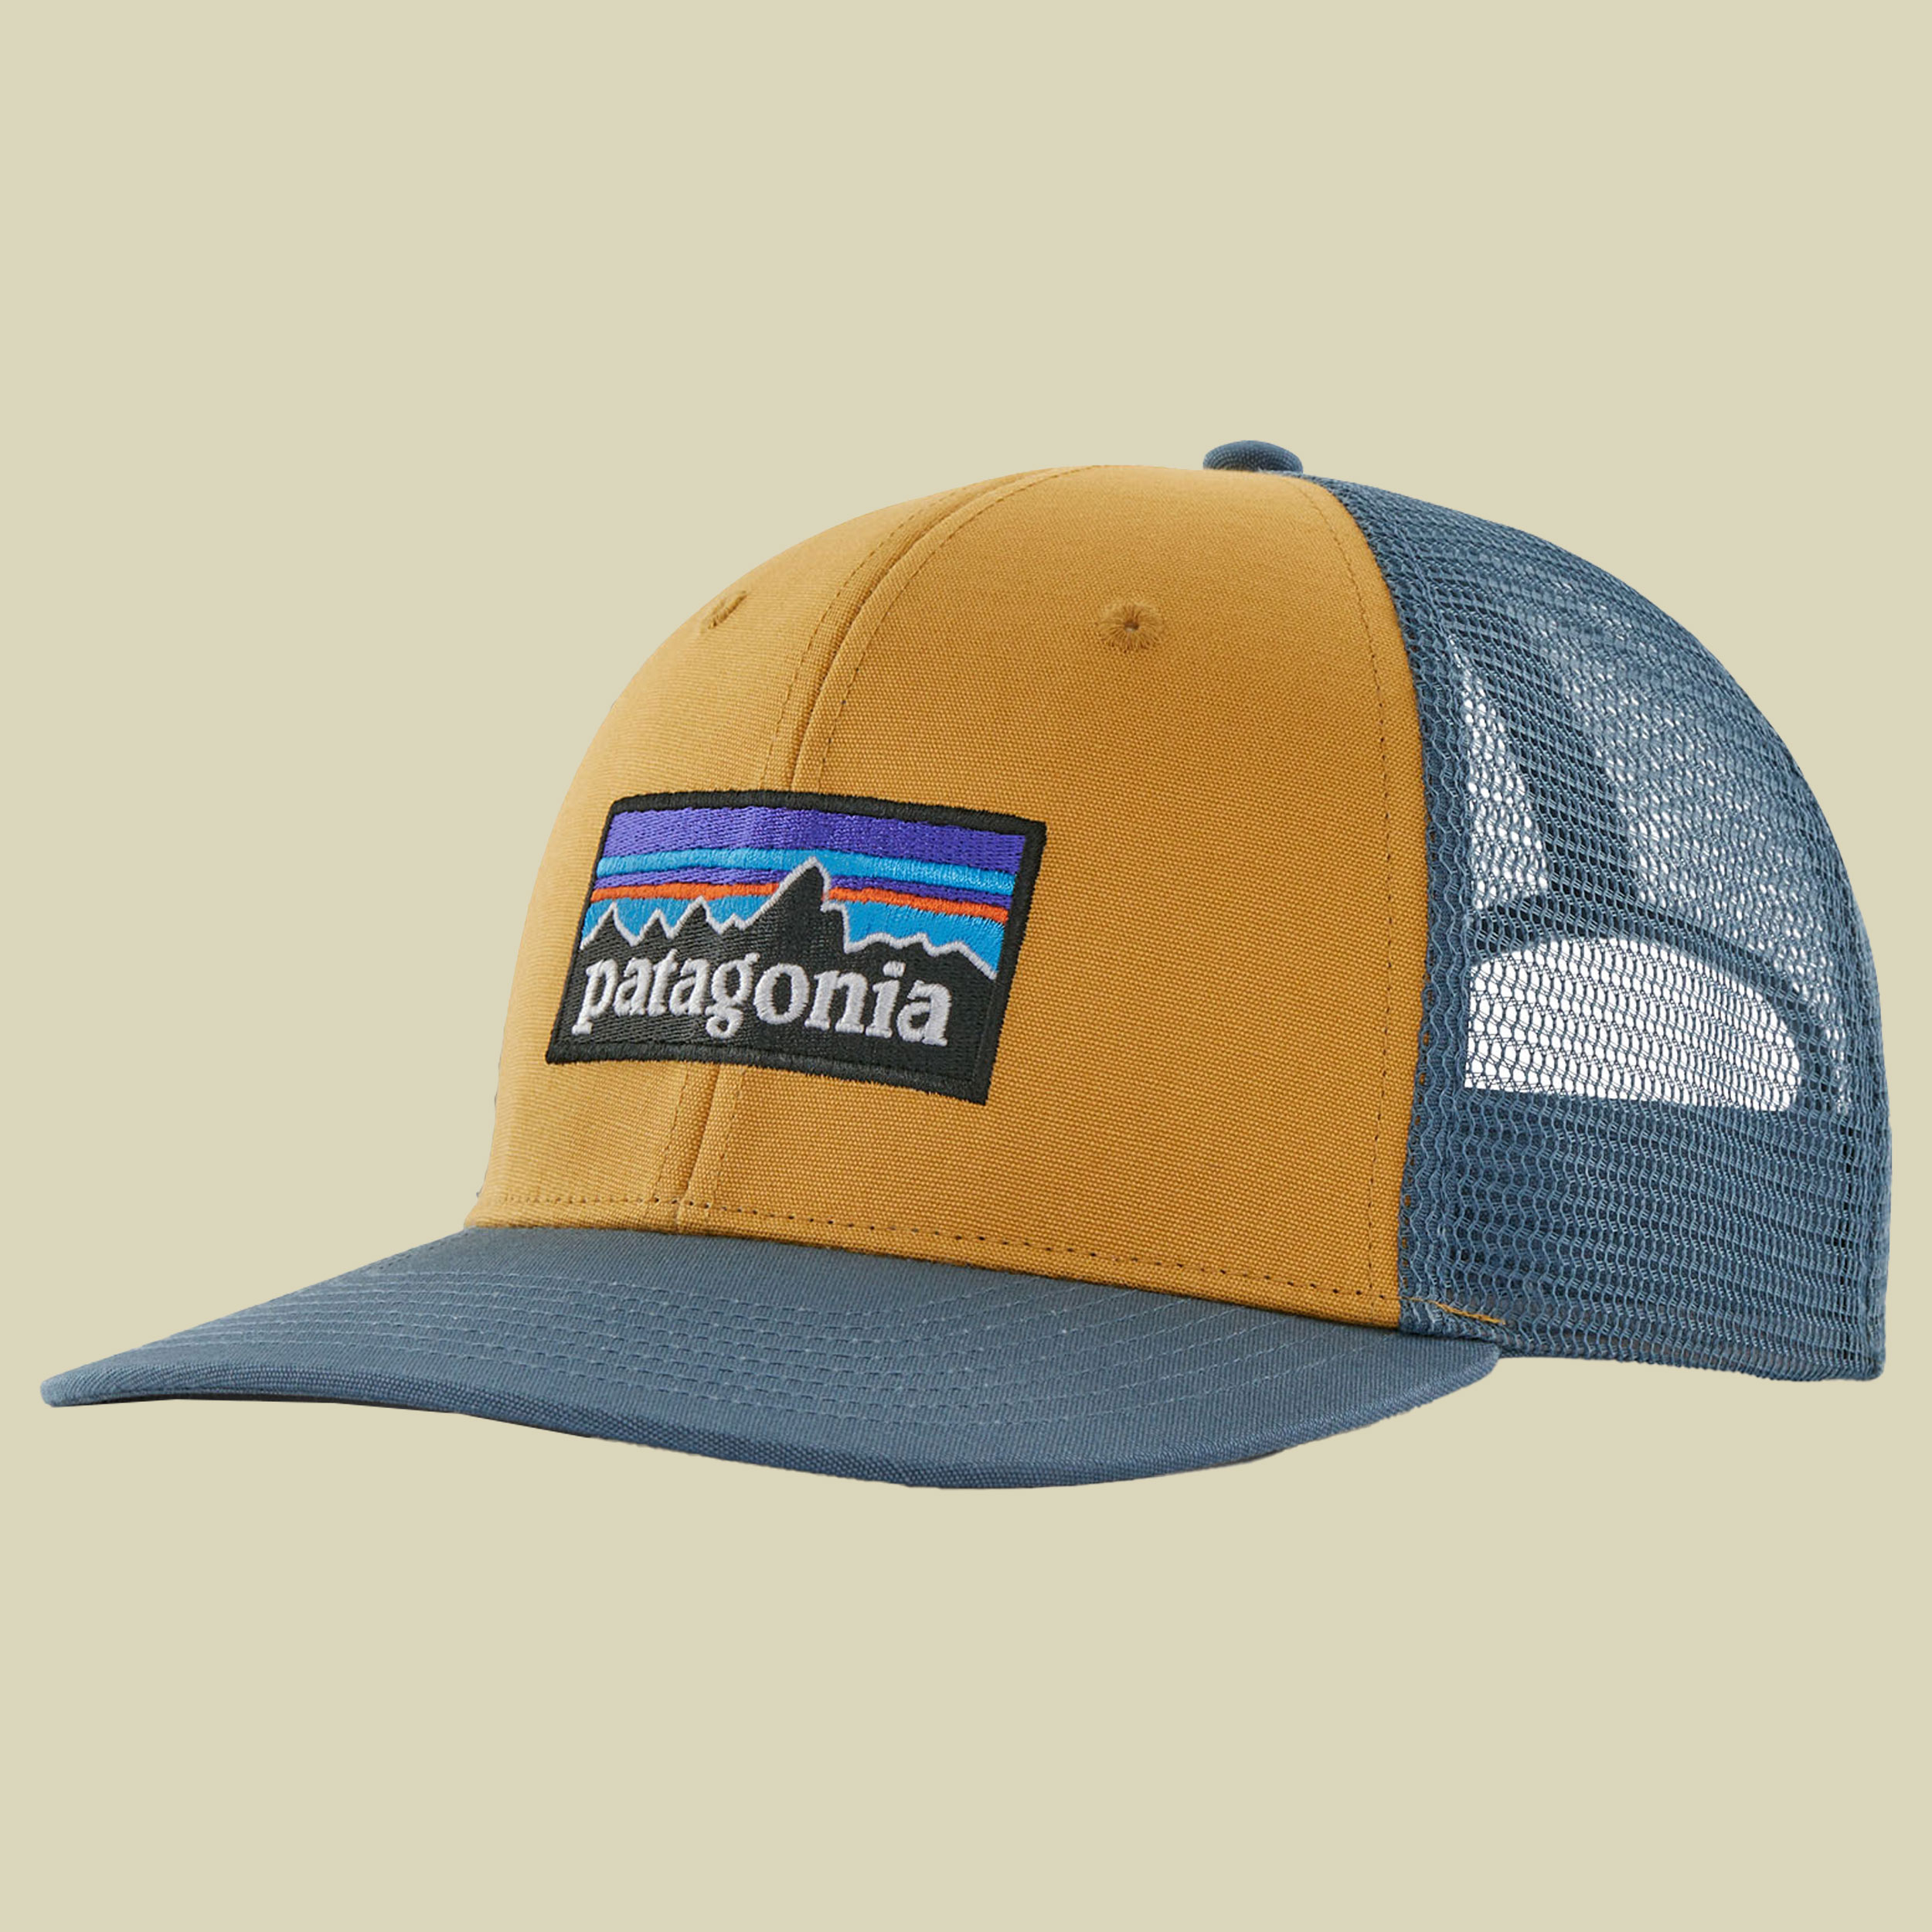 P-6 Logo Trucker Hat orange one size - pufferfish gold